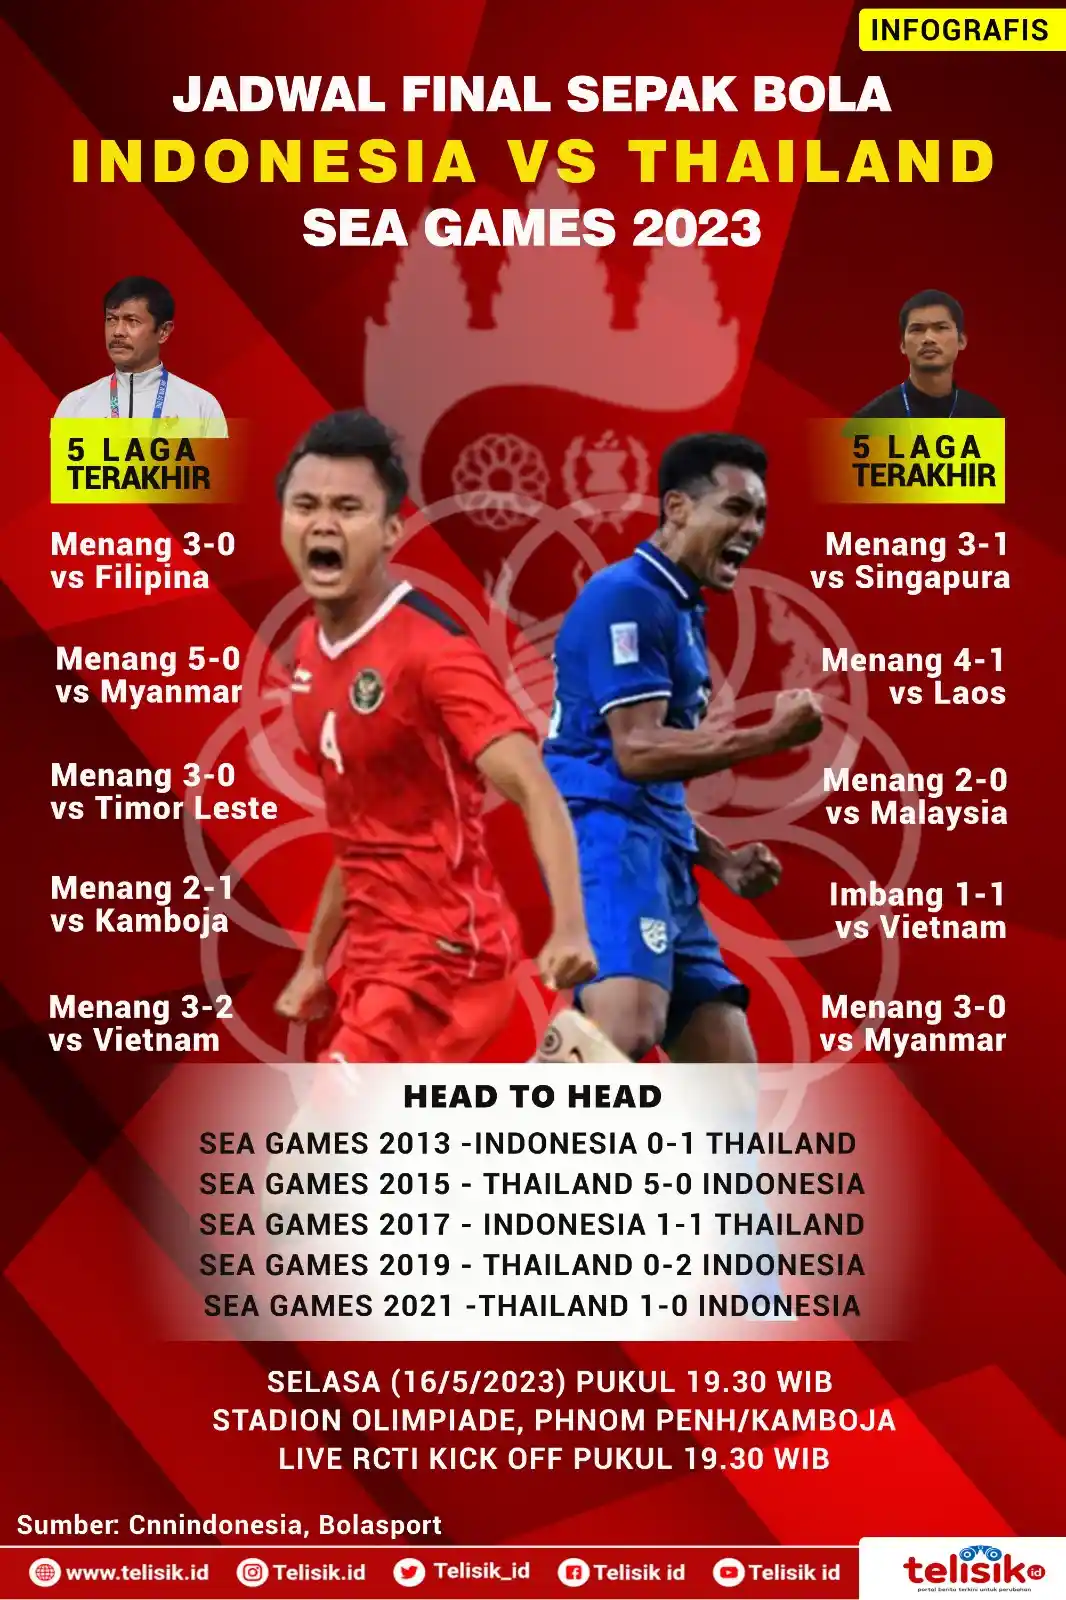 Infografis: Jadwal Final Sepak Bola Indonesia Vs Thailand SEA Games 2023 